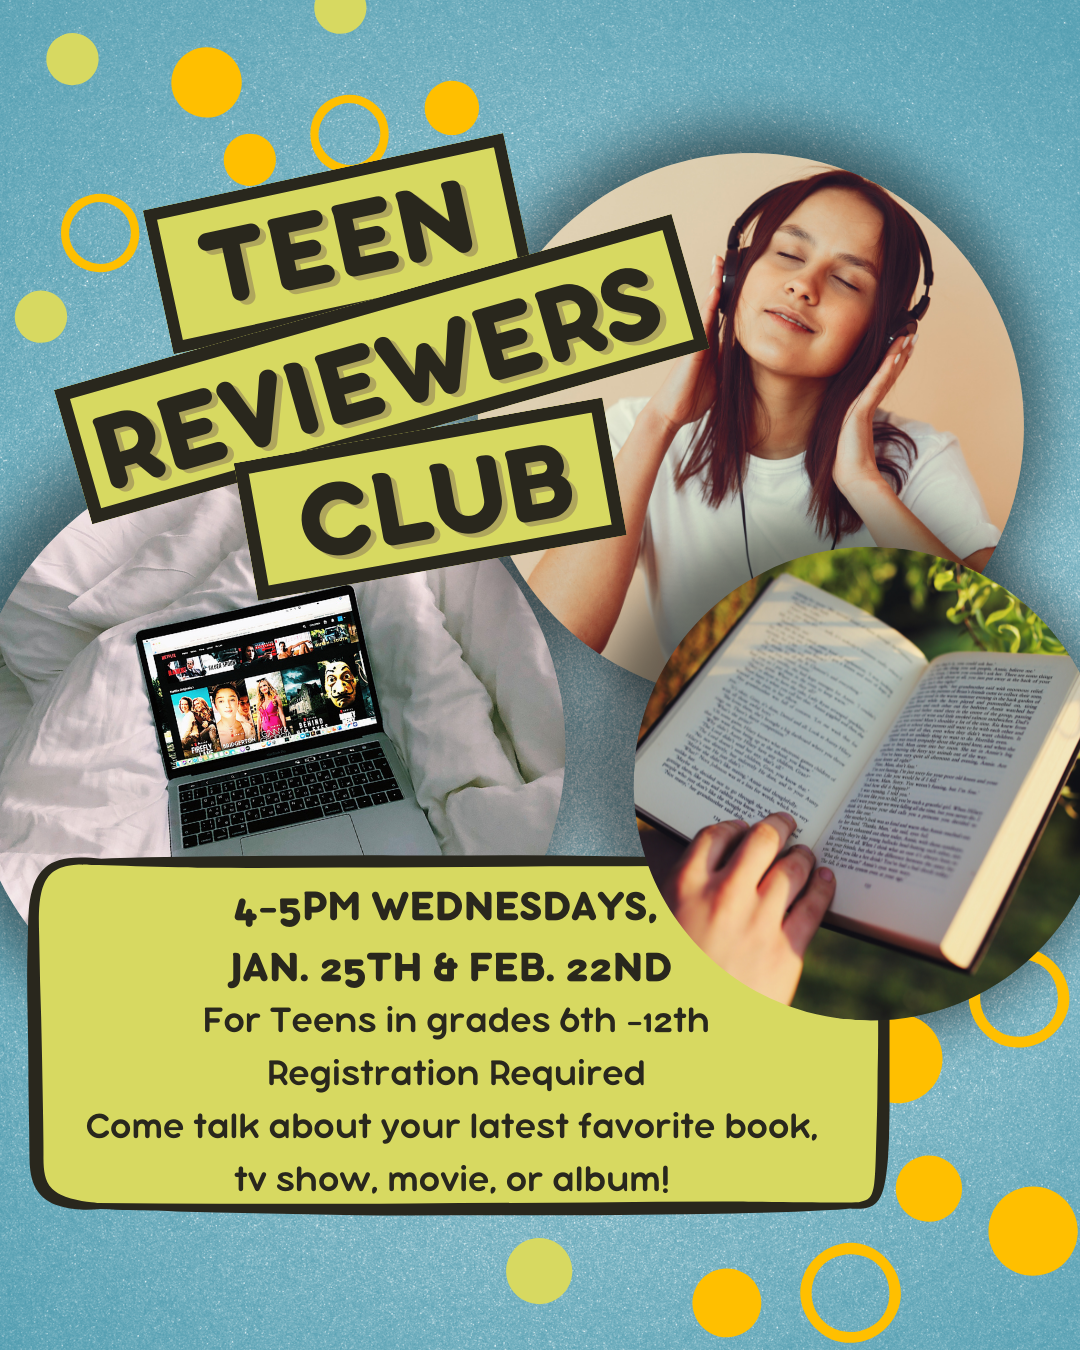 Teen Reviewers Club